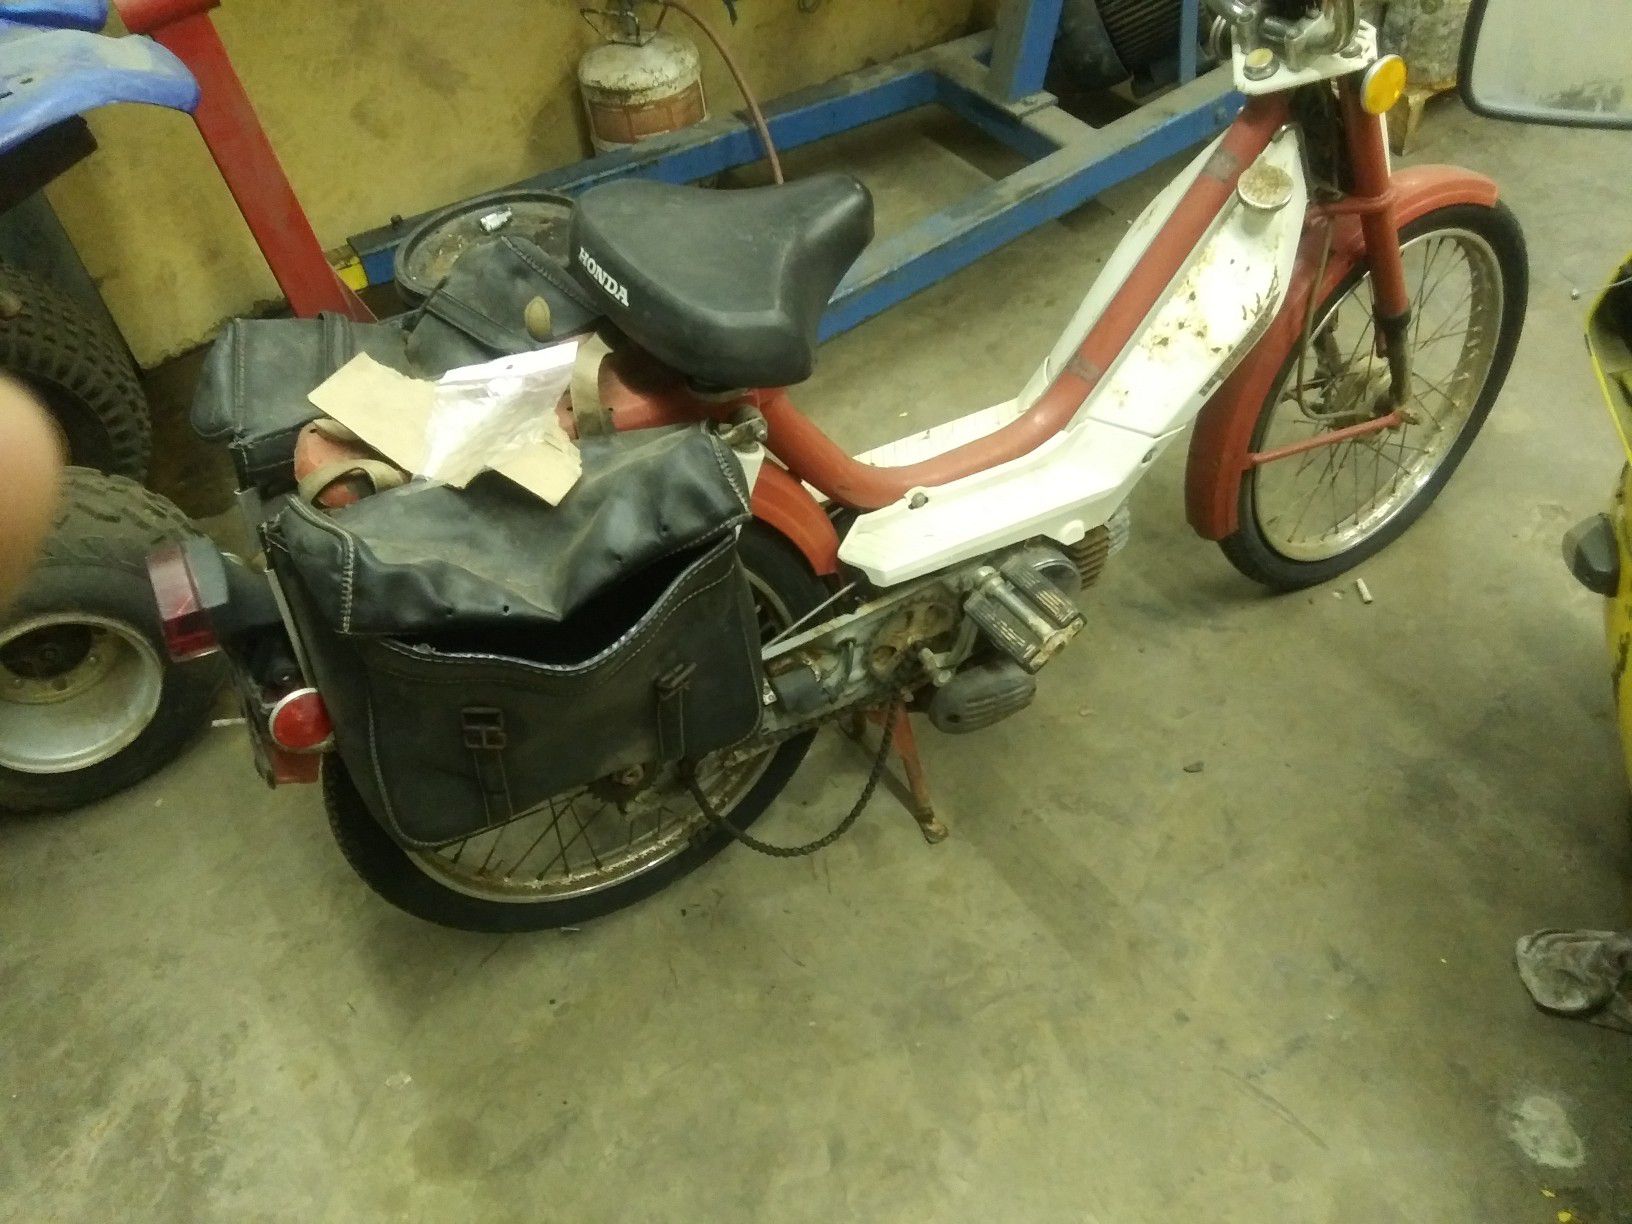 1978 Honda Hobbit Factory leather saddlebags needs restored $300 Motors not locked up